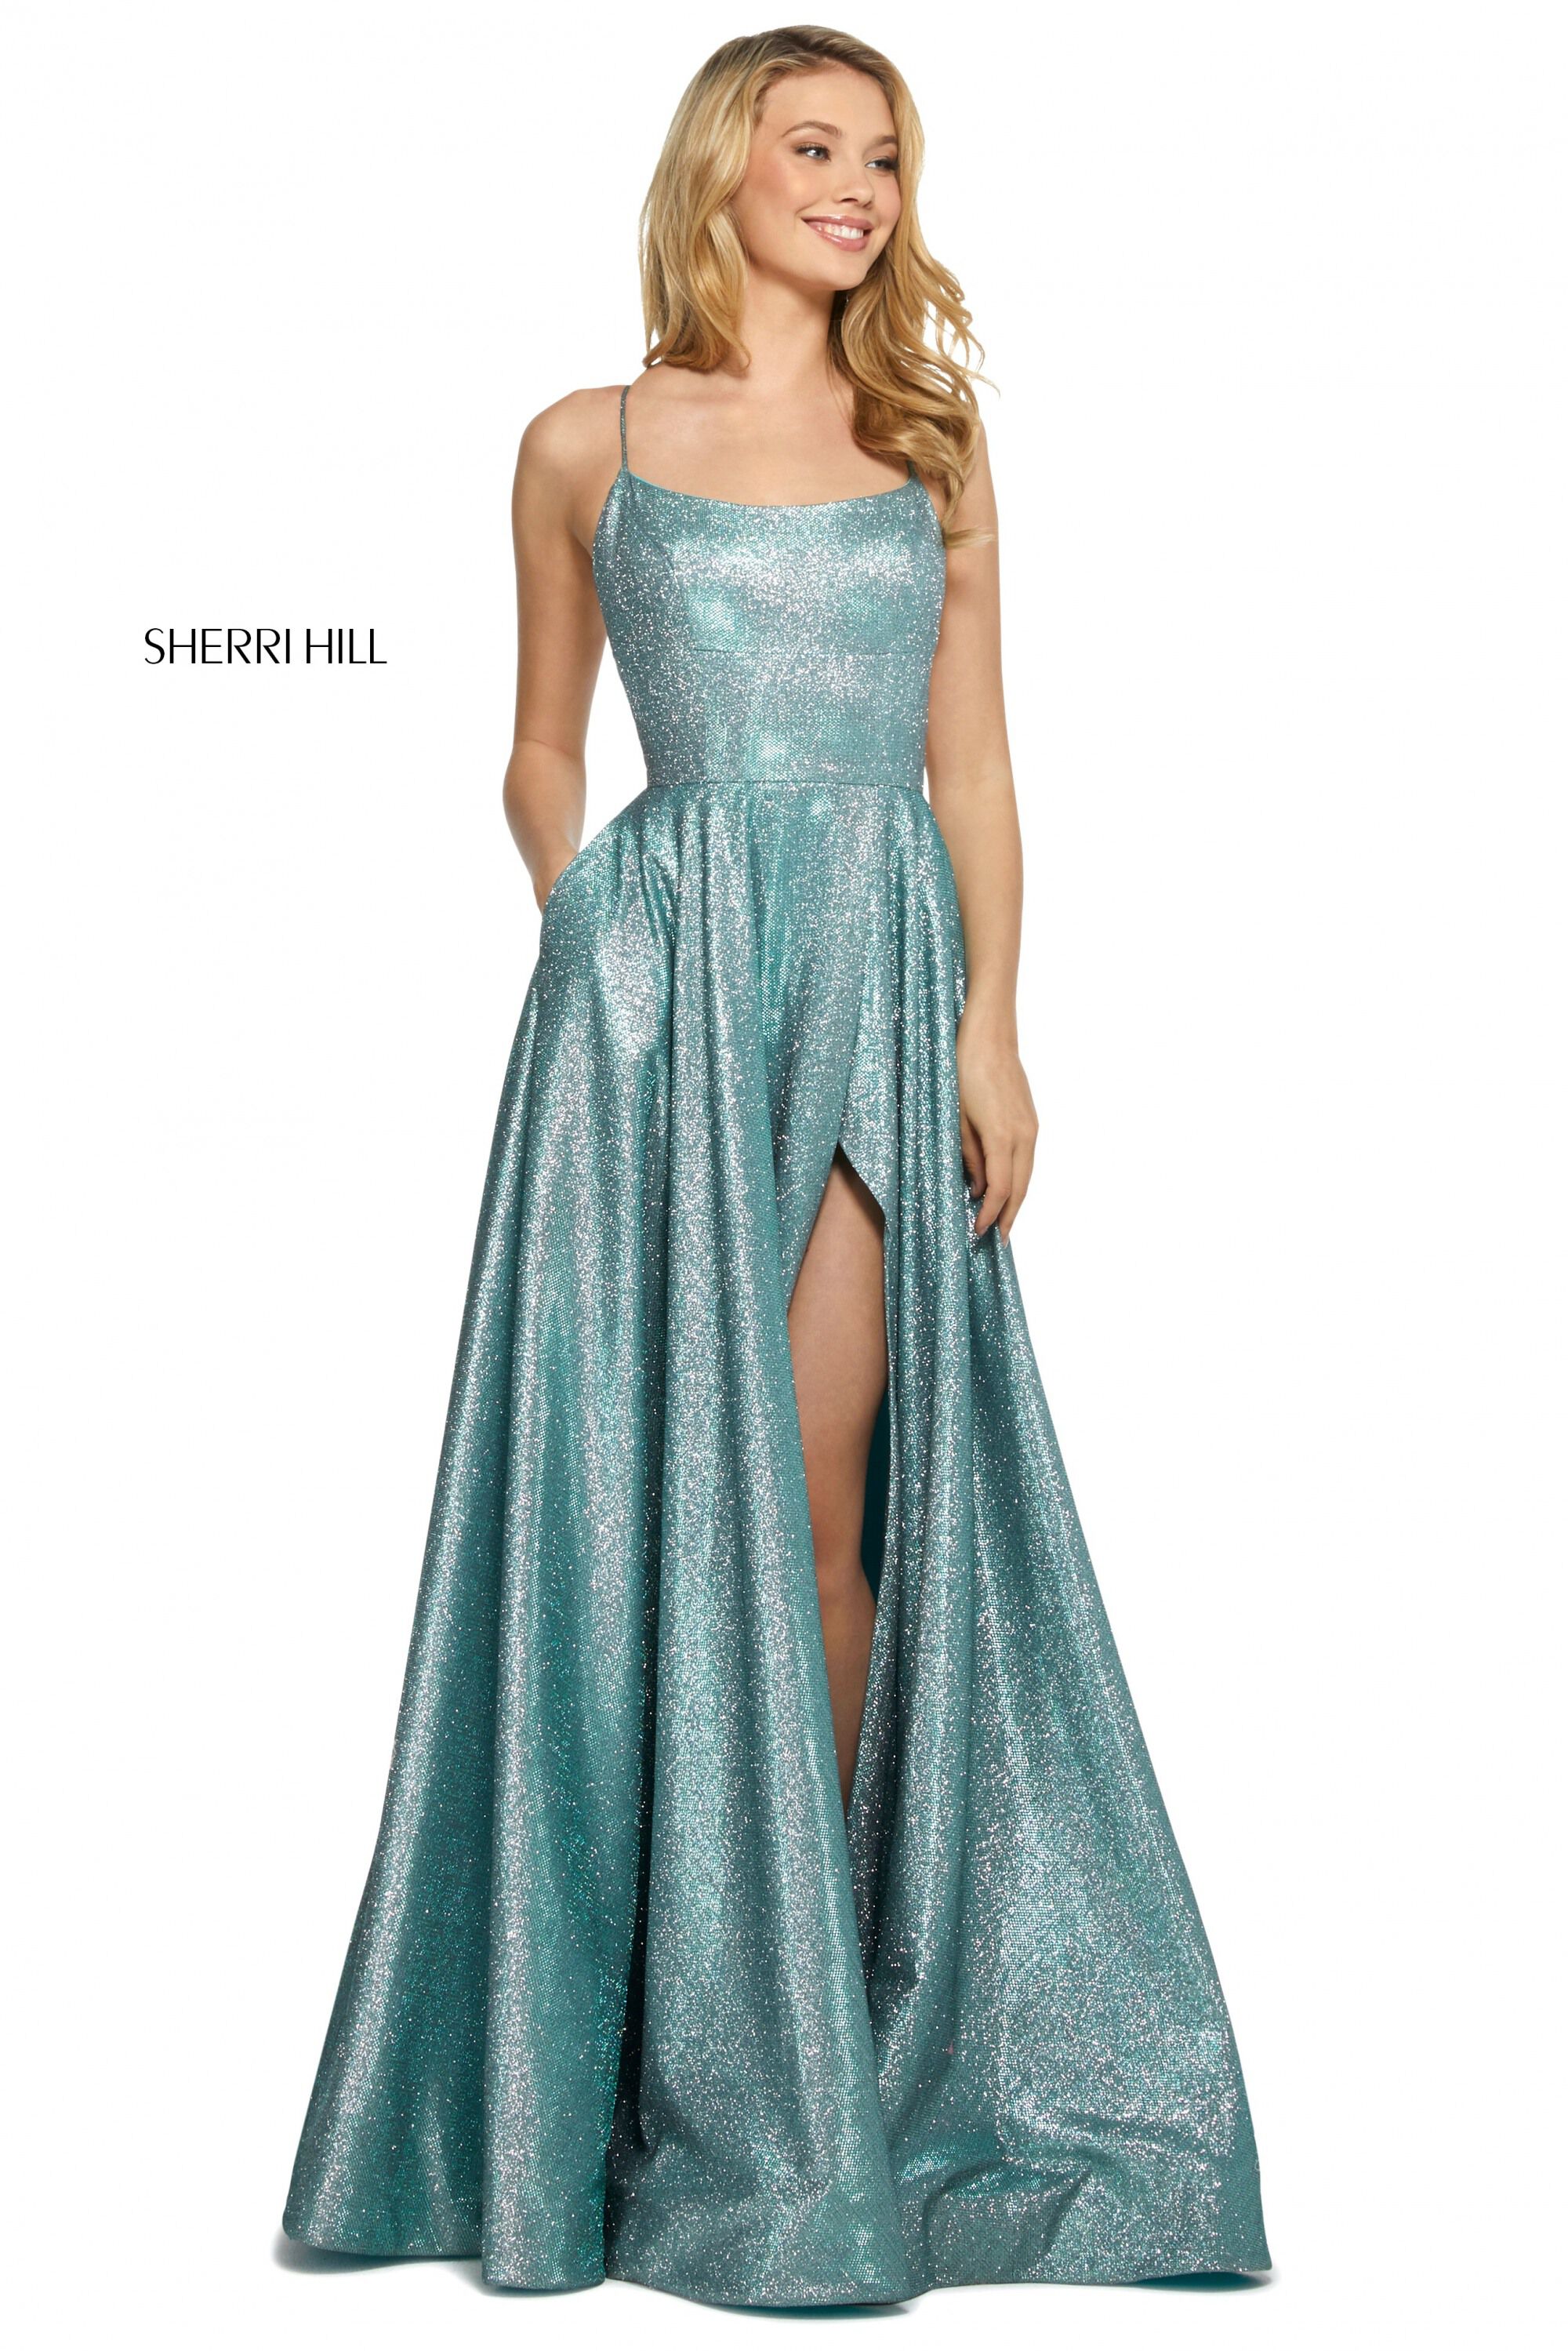 sherri hill glitter ball gown